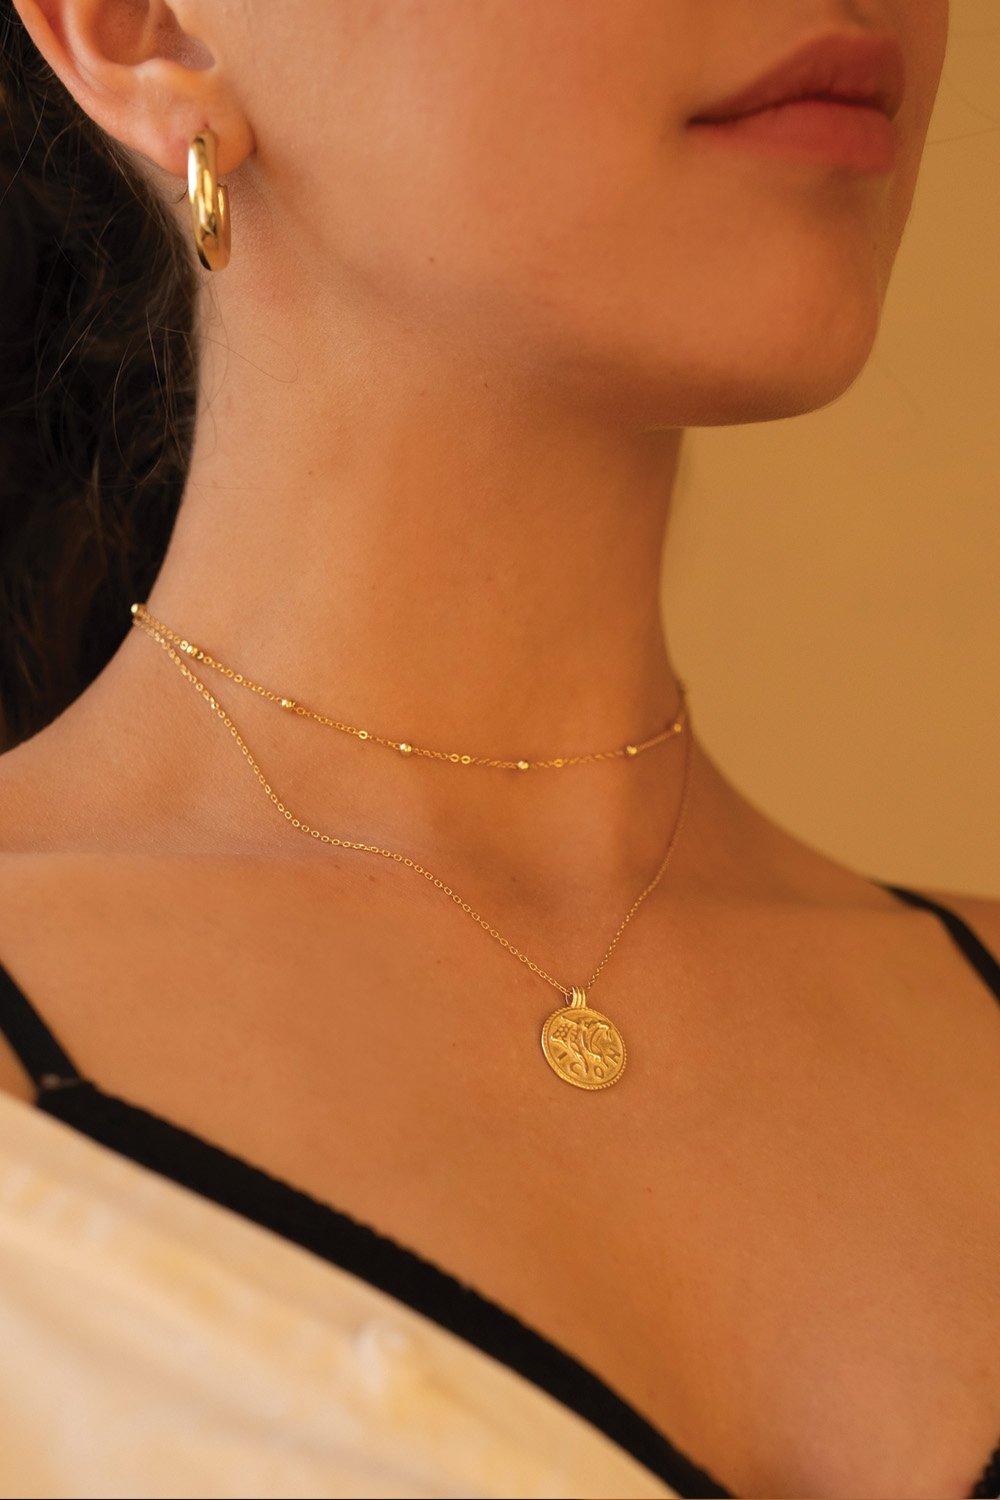 Dainty 14K Gold Bead Choker Necklace